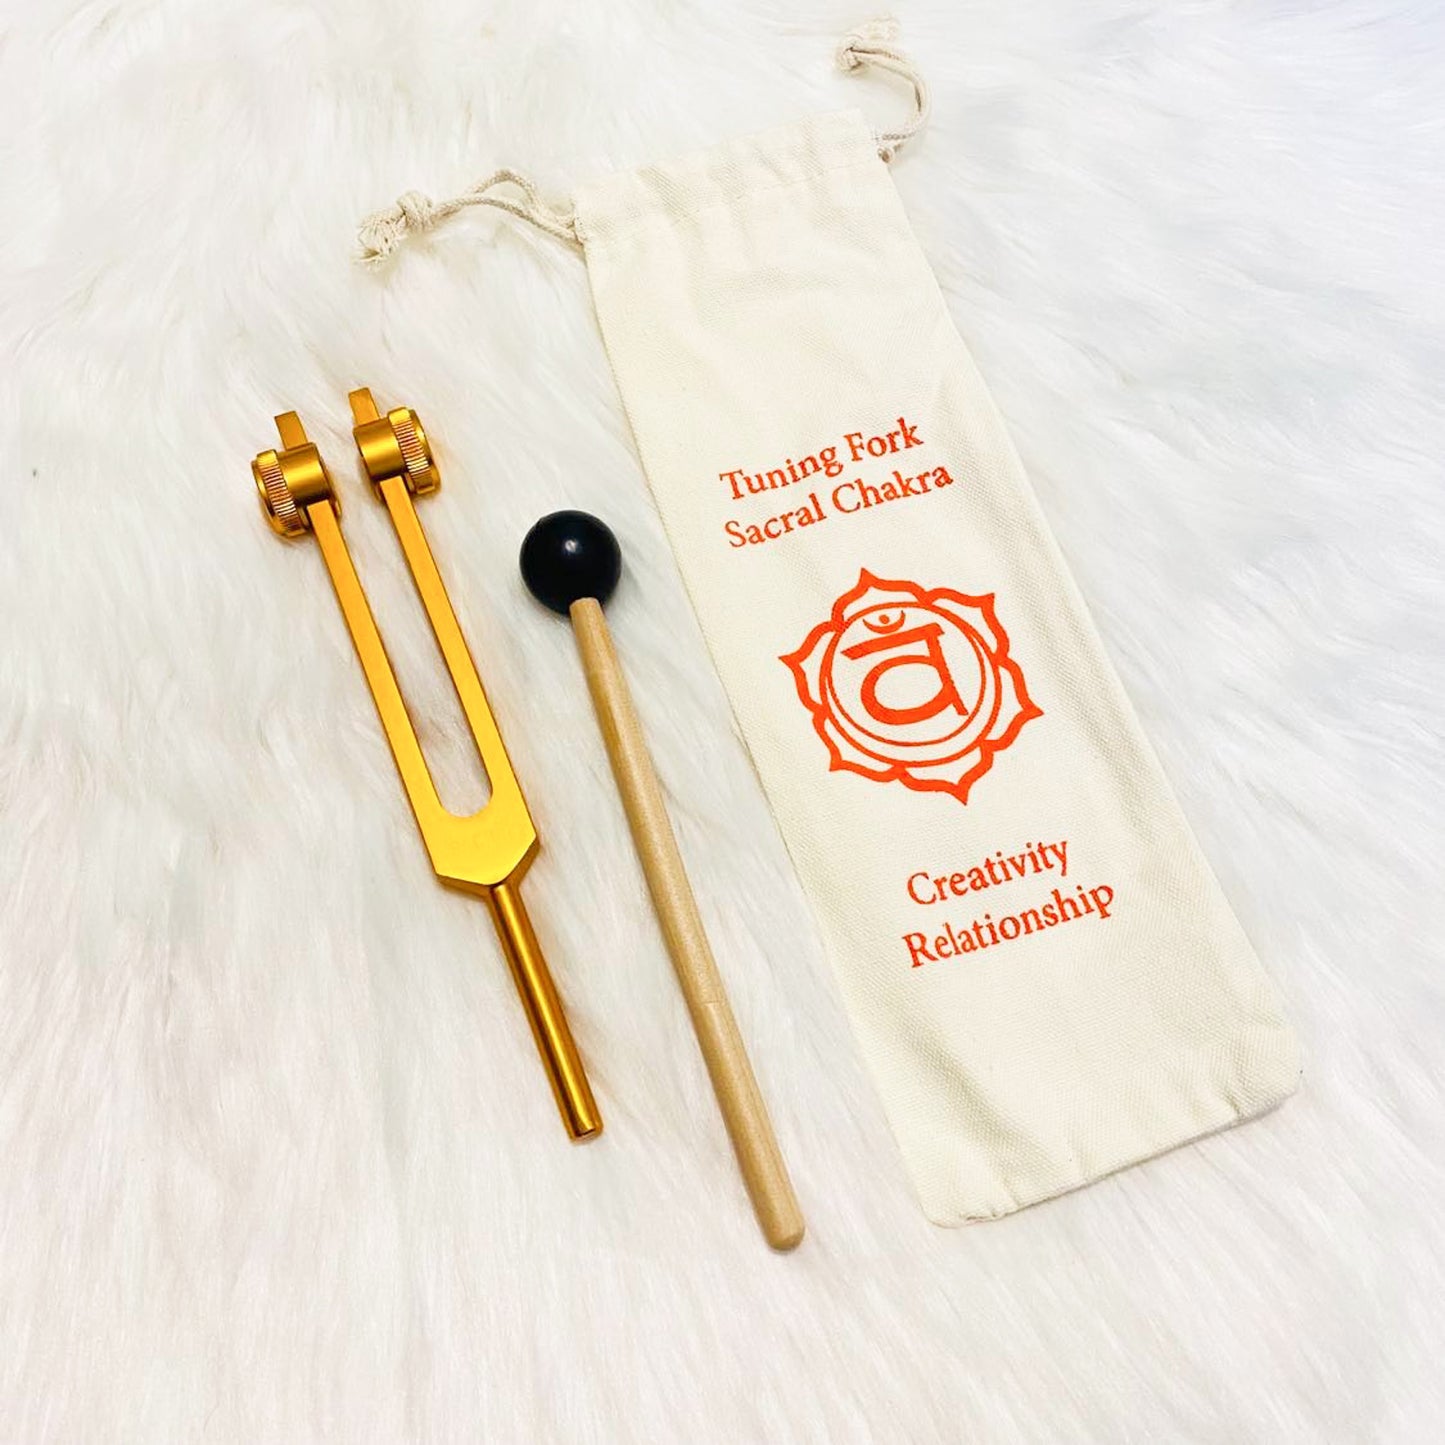 7 Chakra Tuning Fork Set with Individual Chakra Sign Bags and Mallet